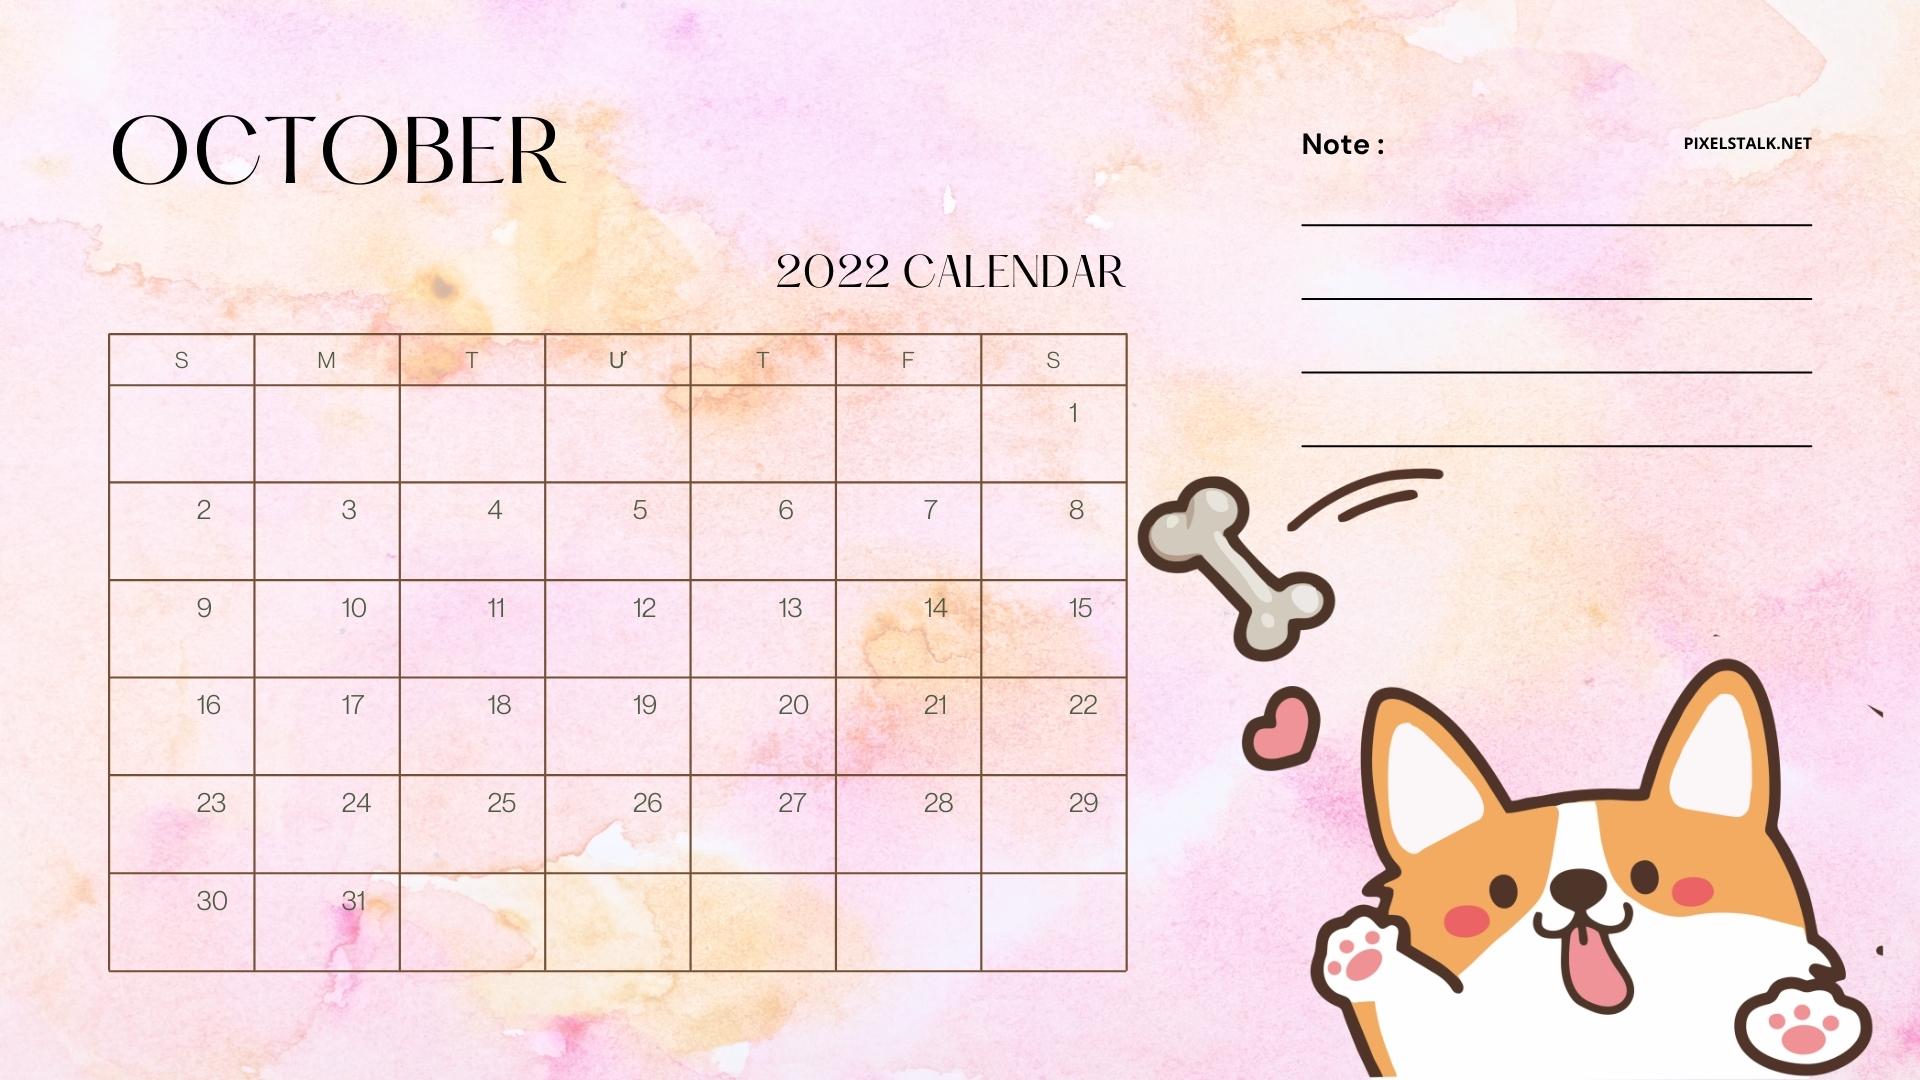 October 2022 Calendar Wallpaper HD Desktop